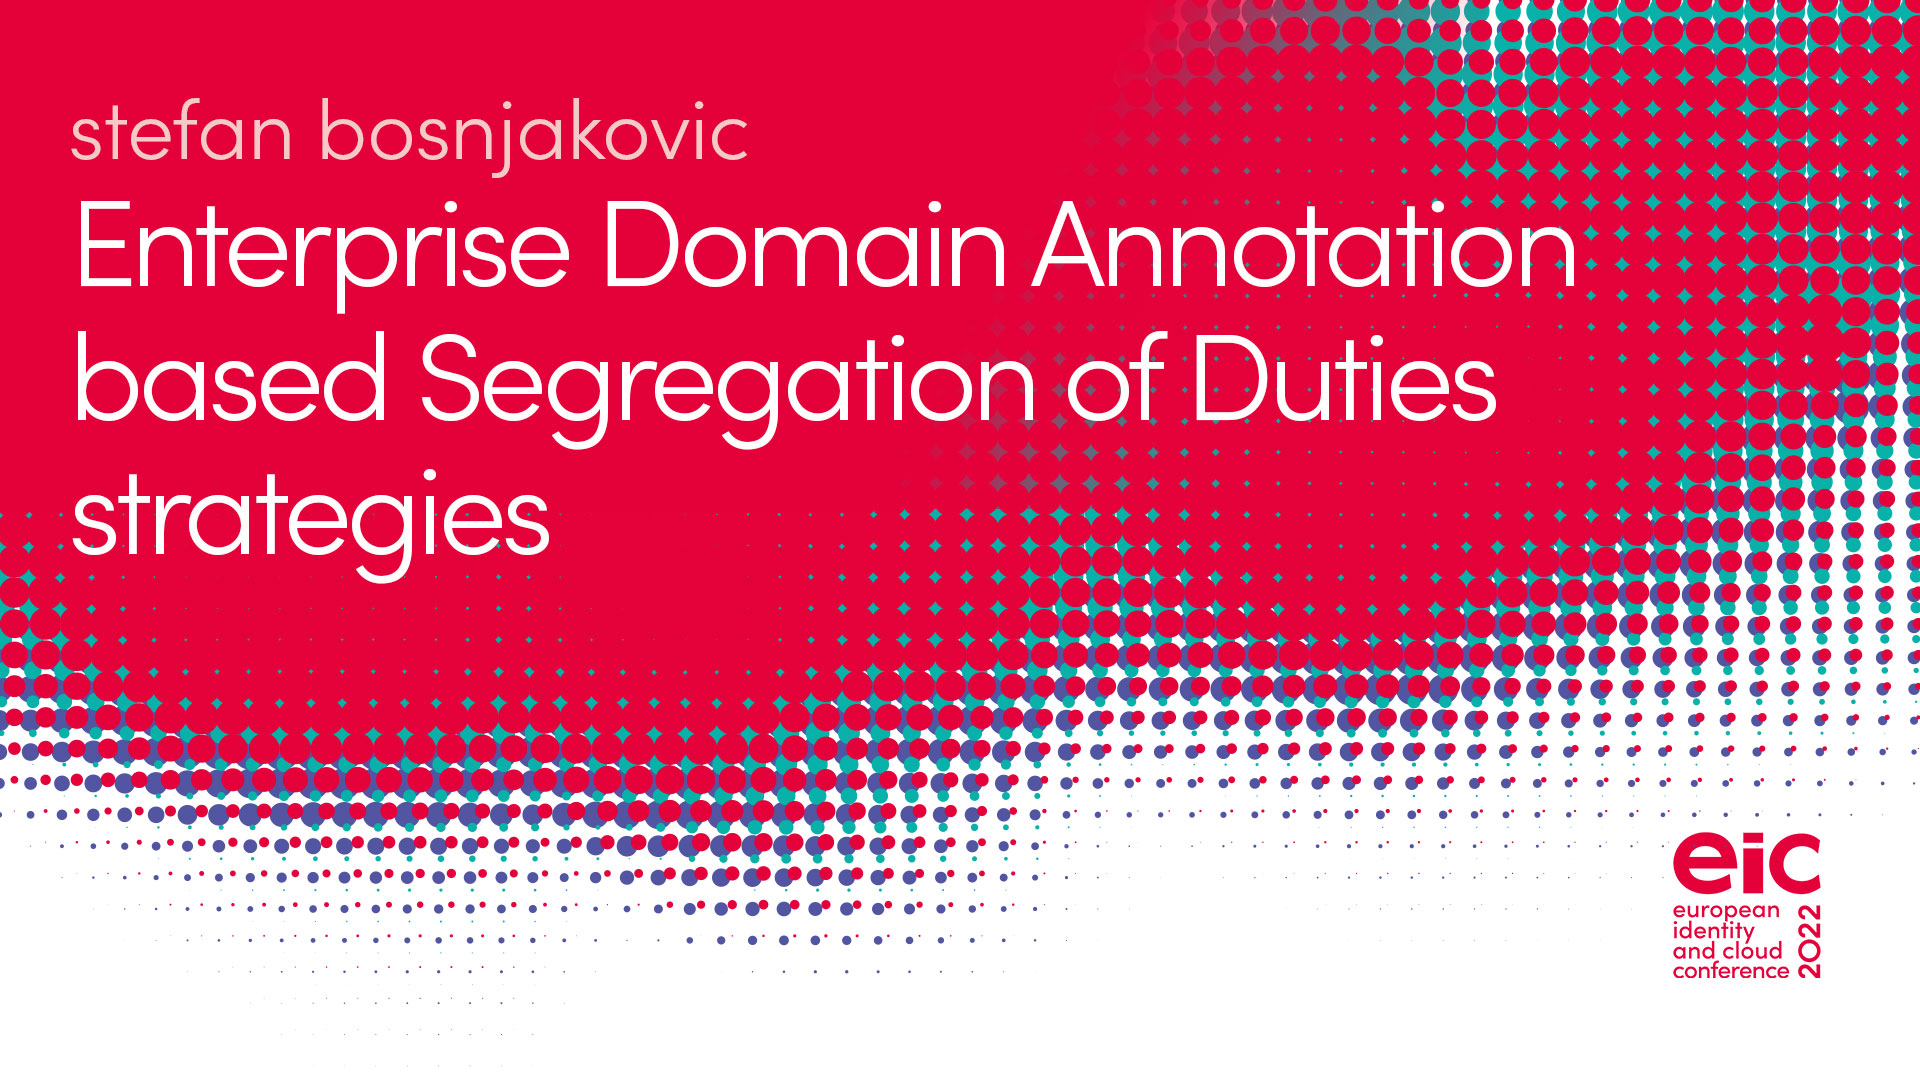 Enterprise Domain Annotation based Segregation of Duties strategies